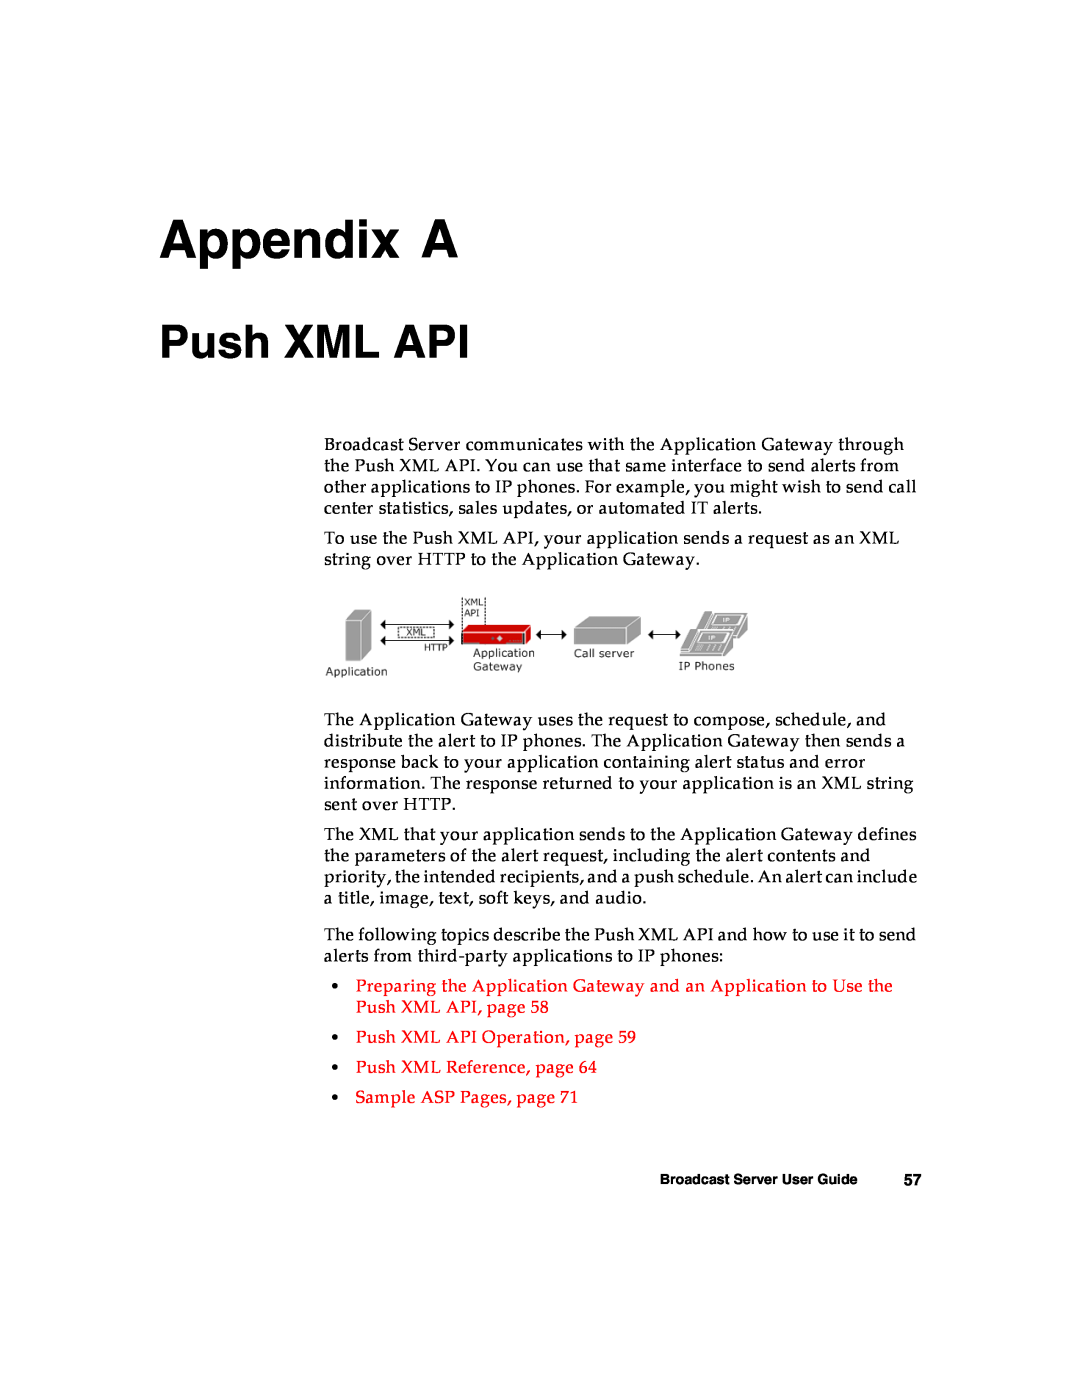 Nortel Networks Broadcast Server warranty Appendix A, Push XML API Operation, page Push XML Reference, page 